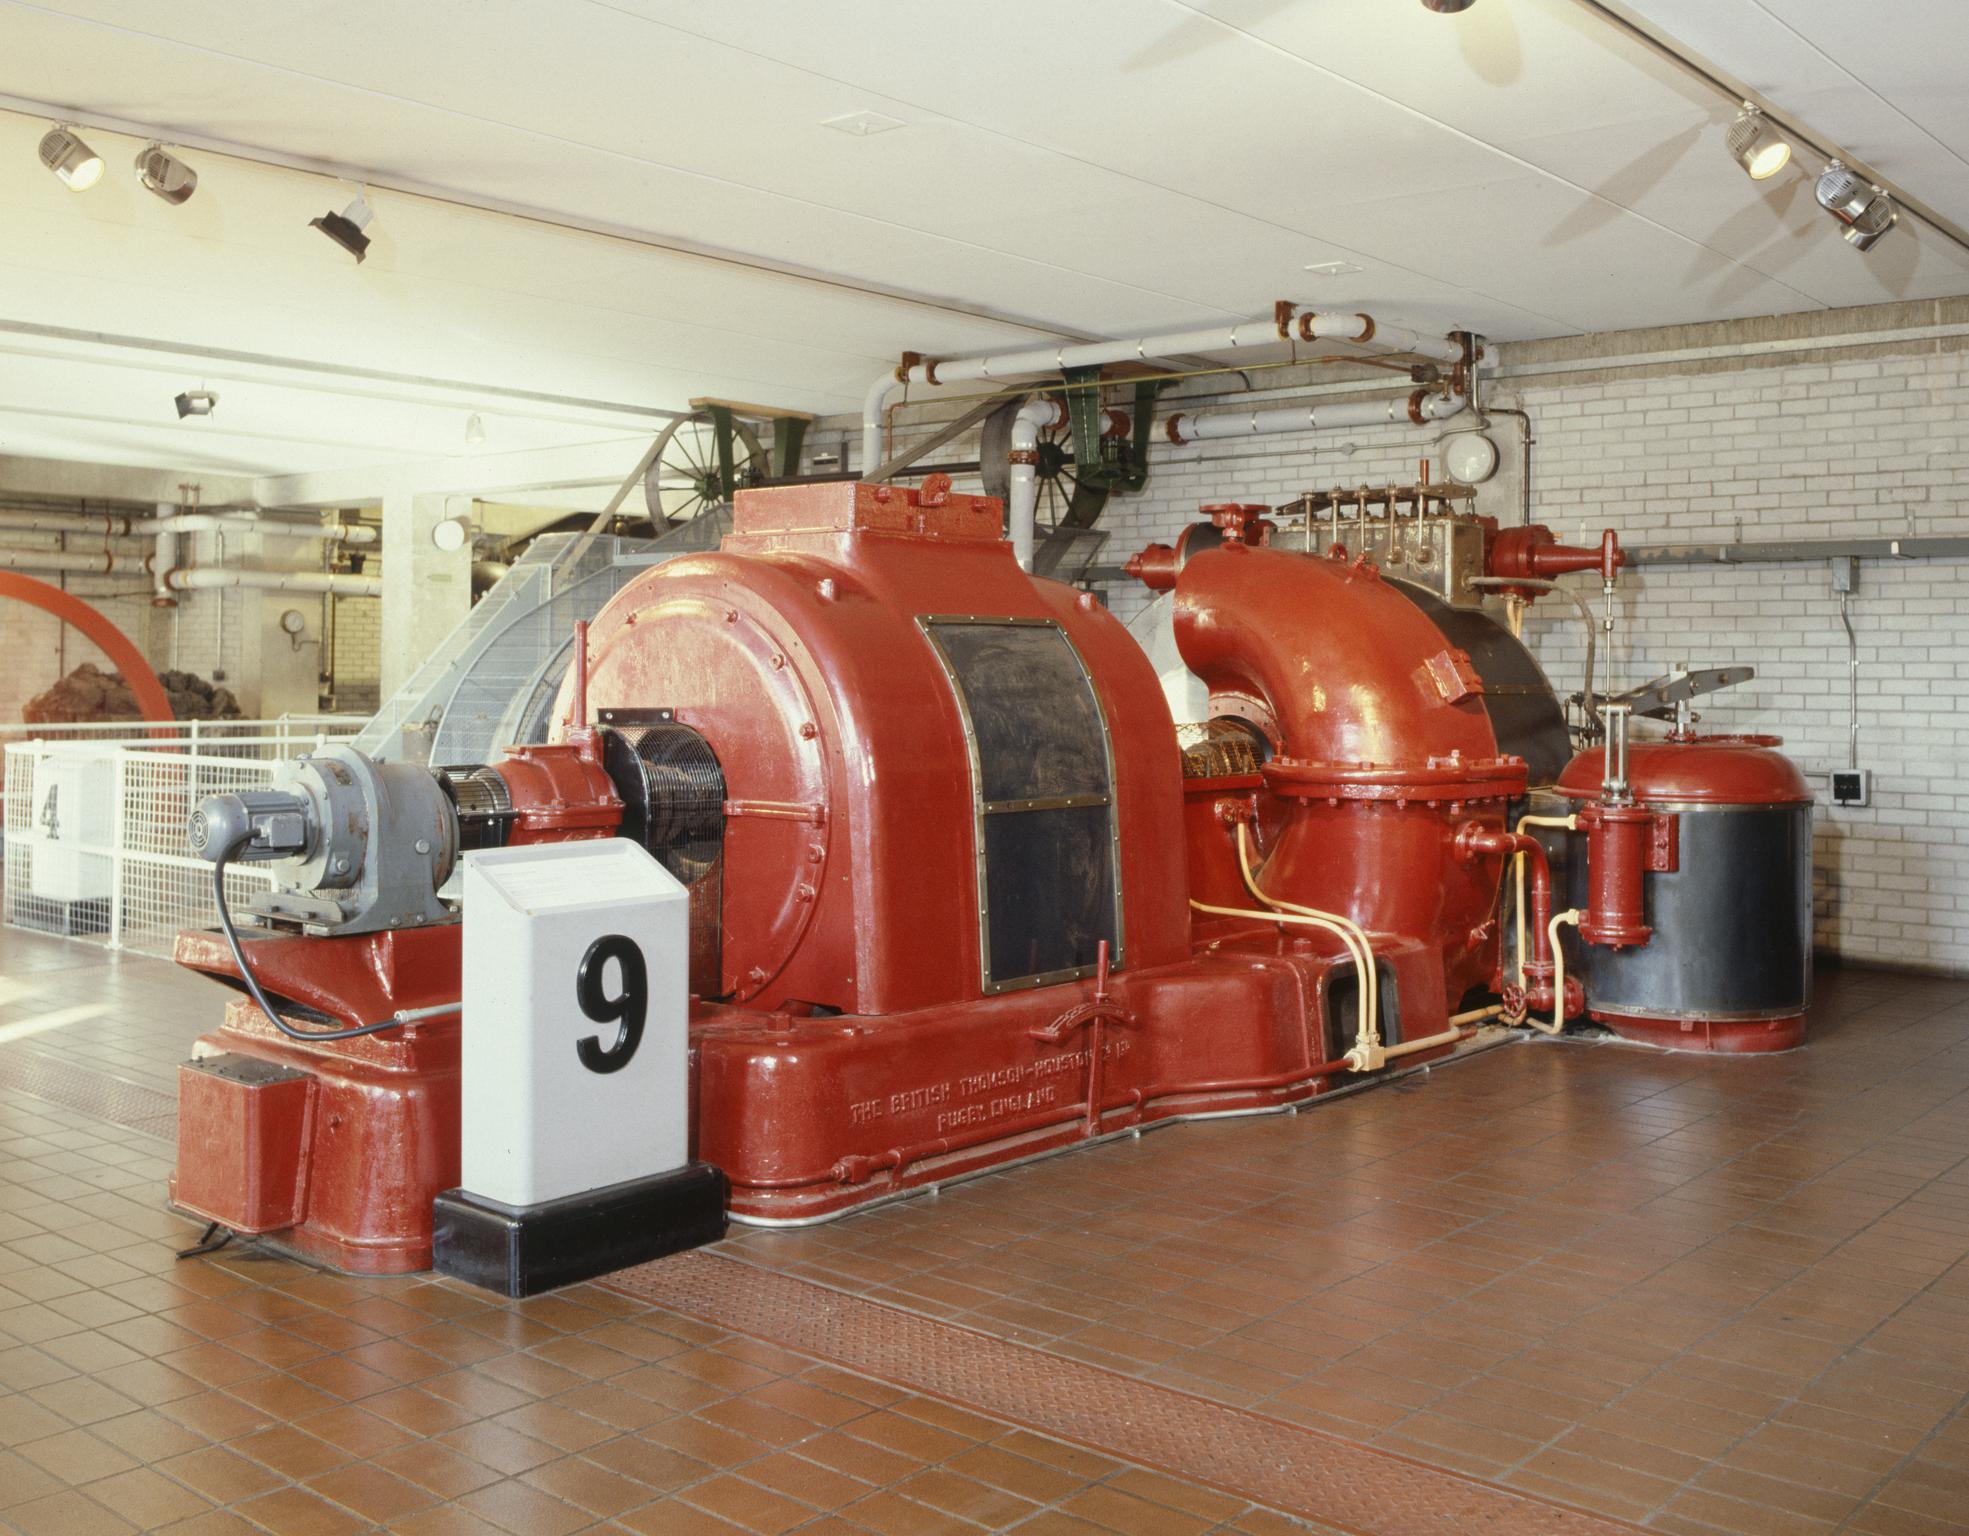 Turbo-alternator from Hatfield Colliery